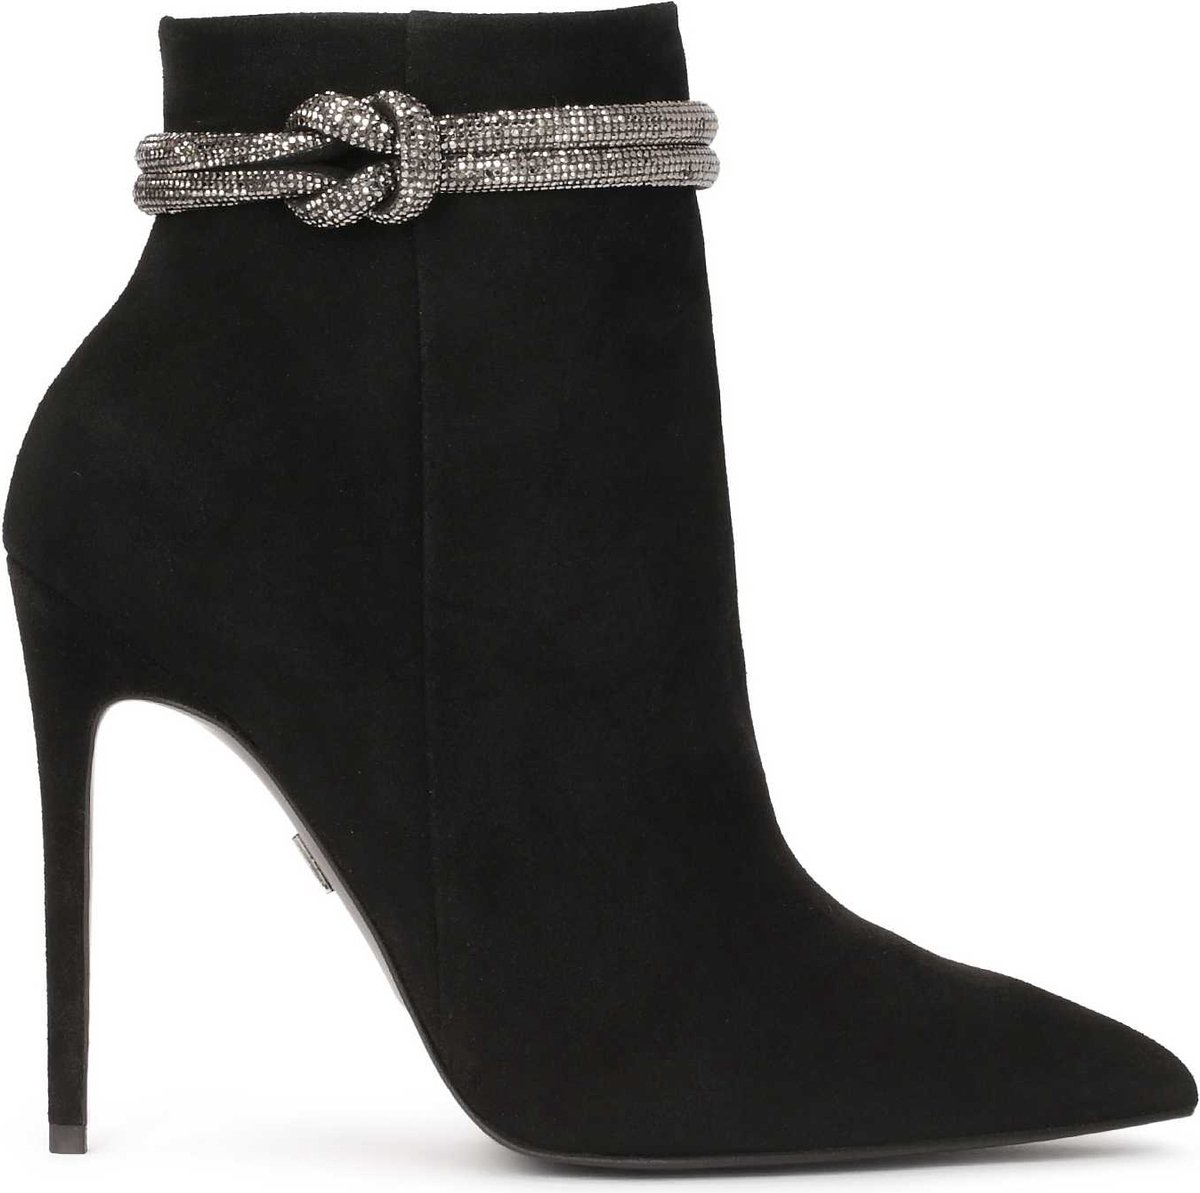 Kazar Black boots on a slender stiletto heel with a striking embellishment